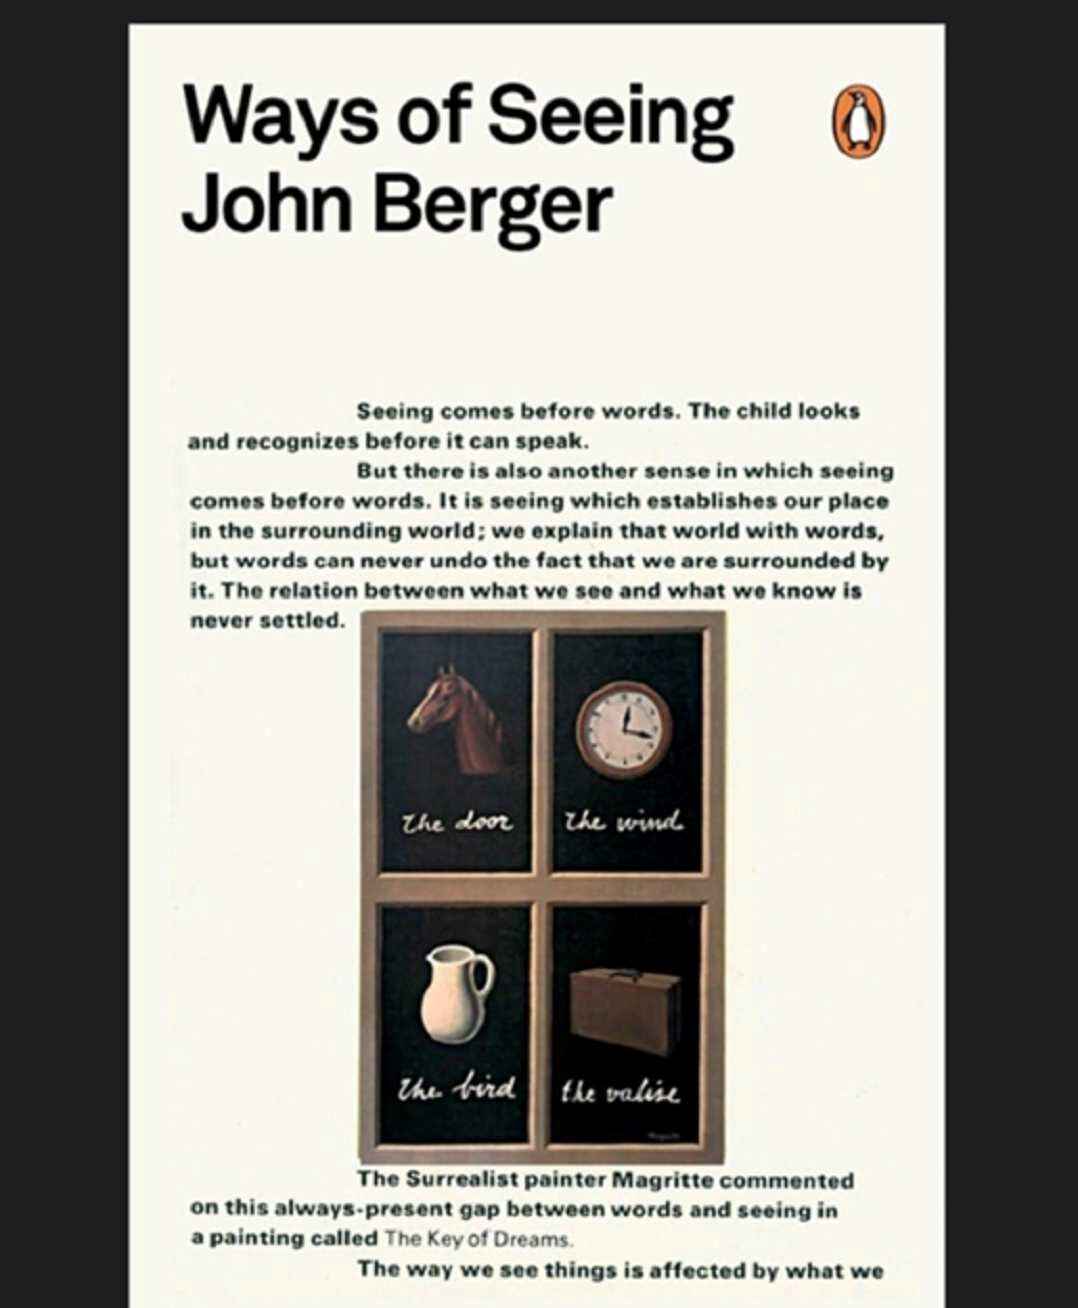 ways-of-seeing-book-by-john-berger